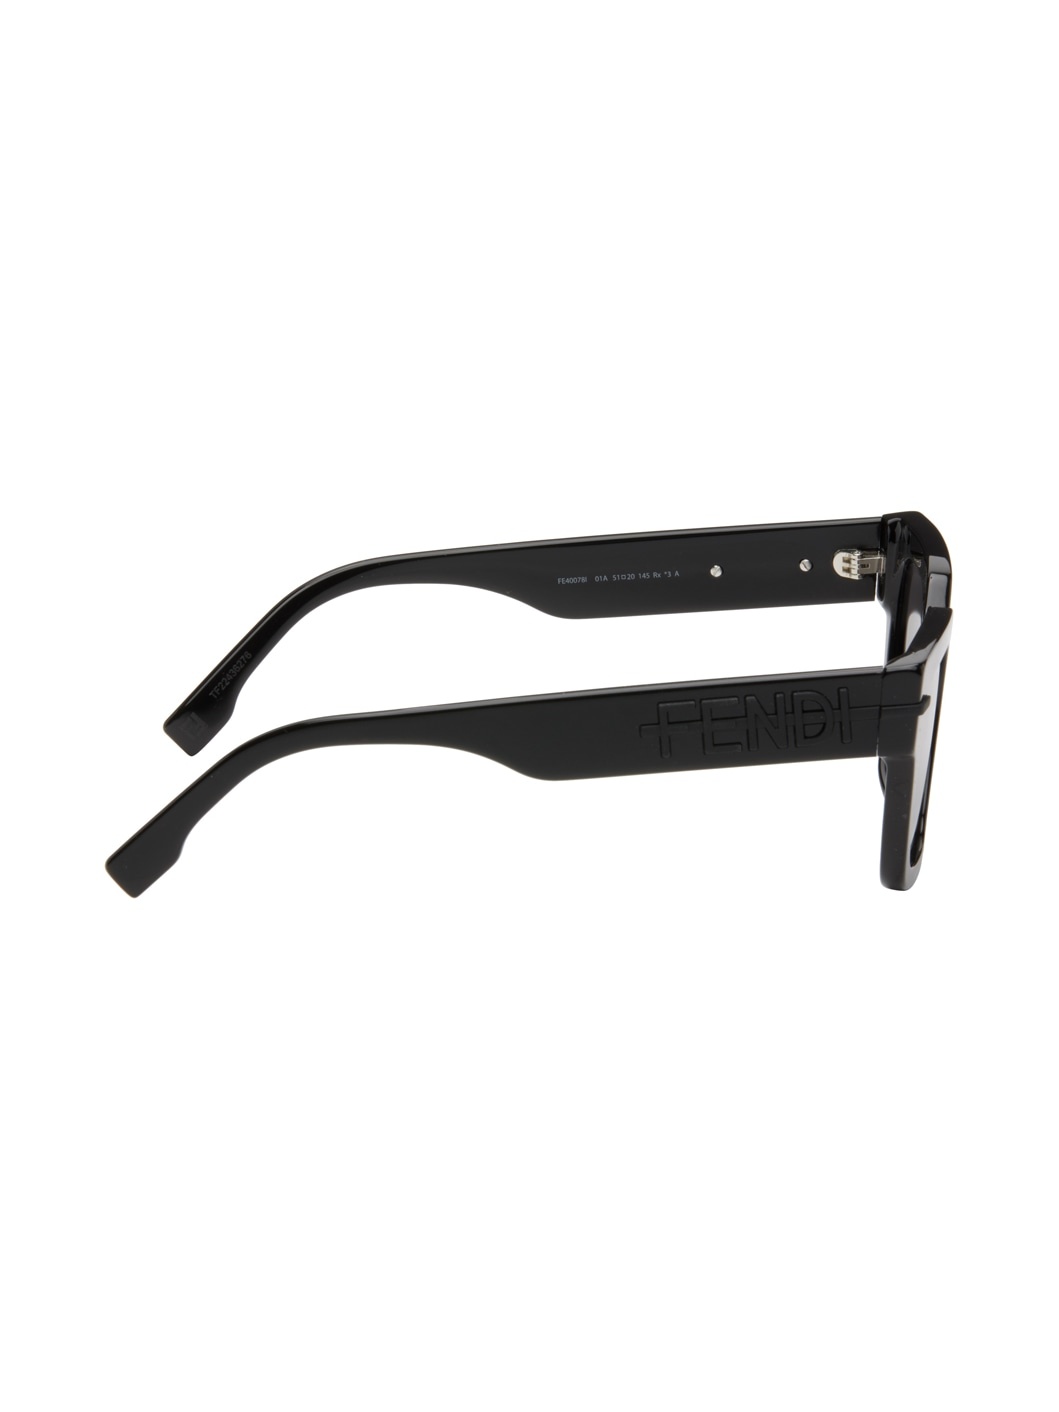 Black Fendigraphy Sunglasses - 2